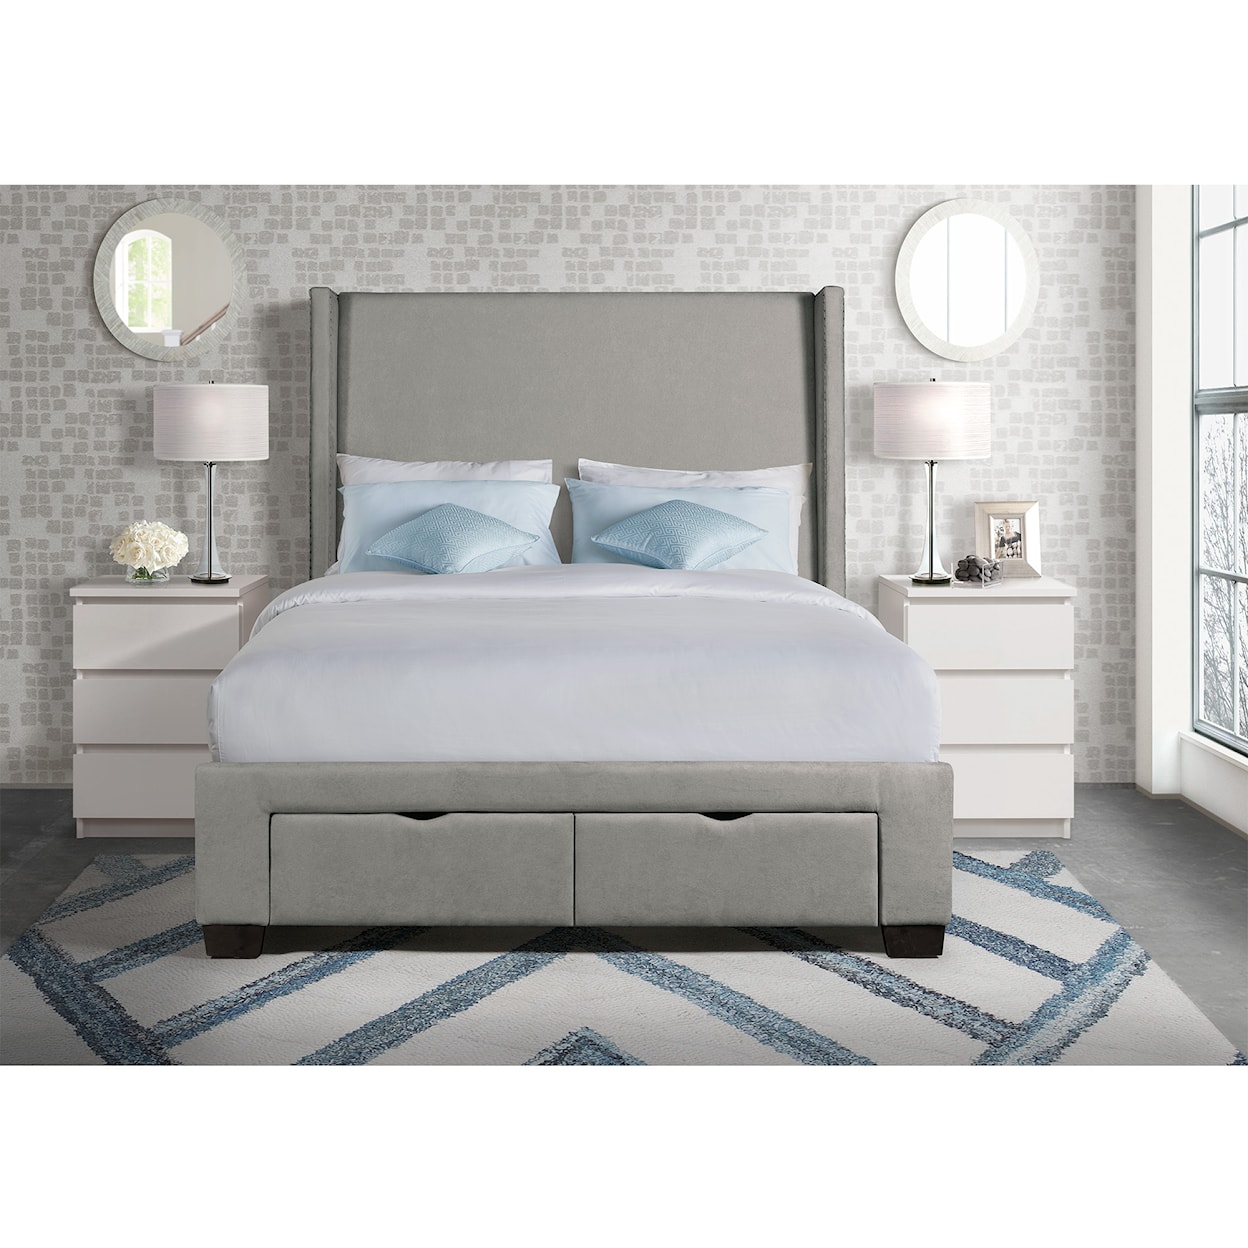 Elements International Magnolia Queen Upholstered Storage Bed